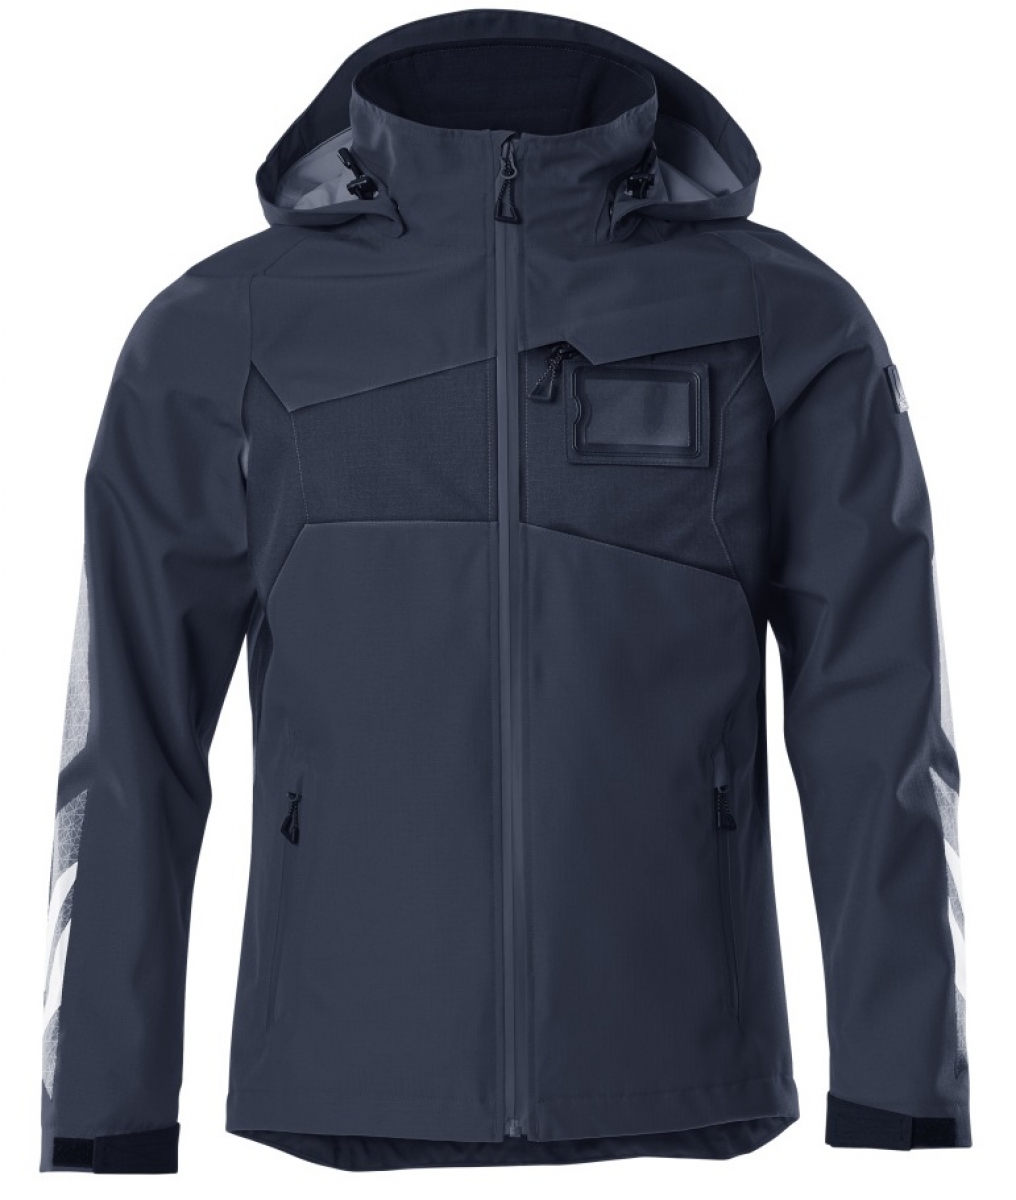 MASCOT-Workwear, Klteschutz, Hard Shell Jacke, 210, g/m, schwarzblau